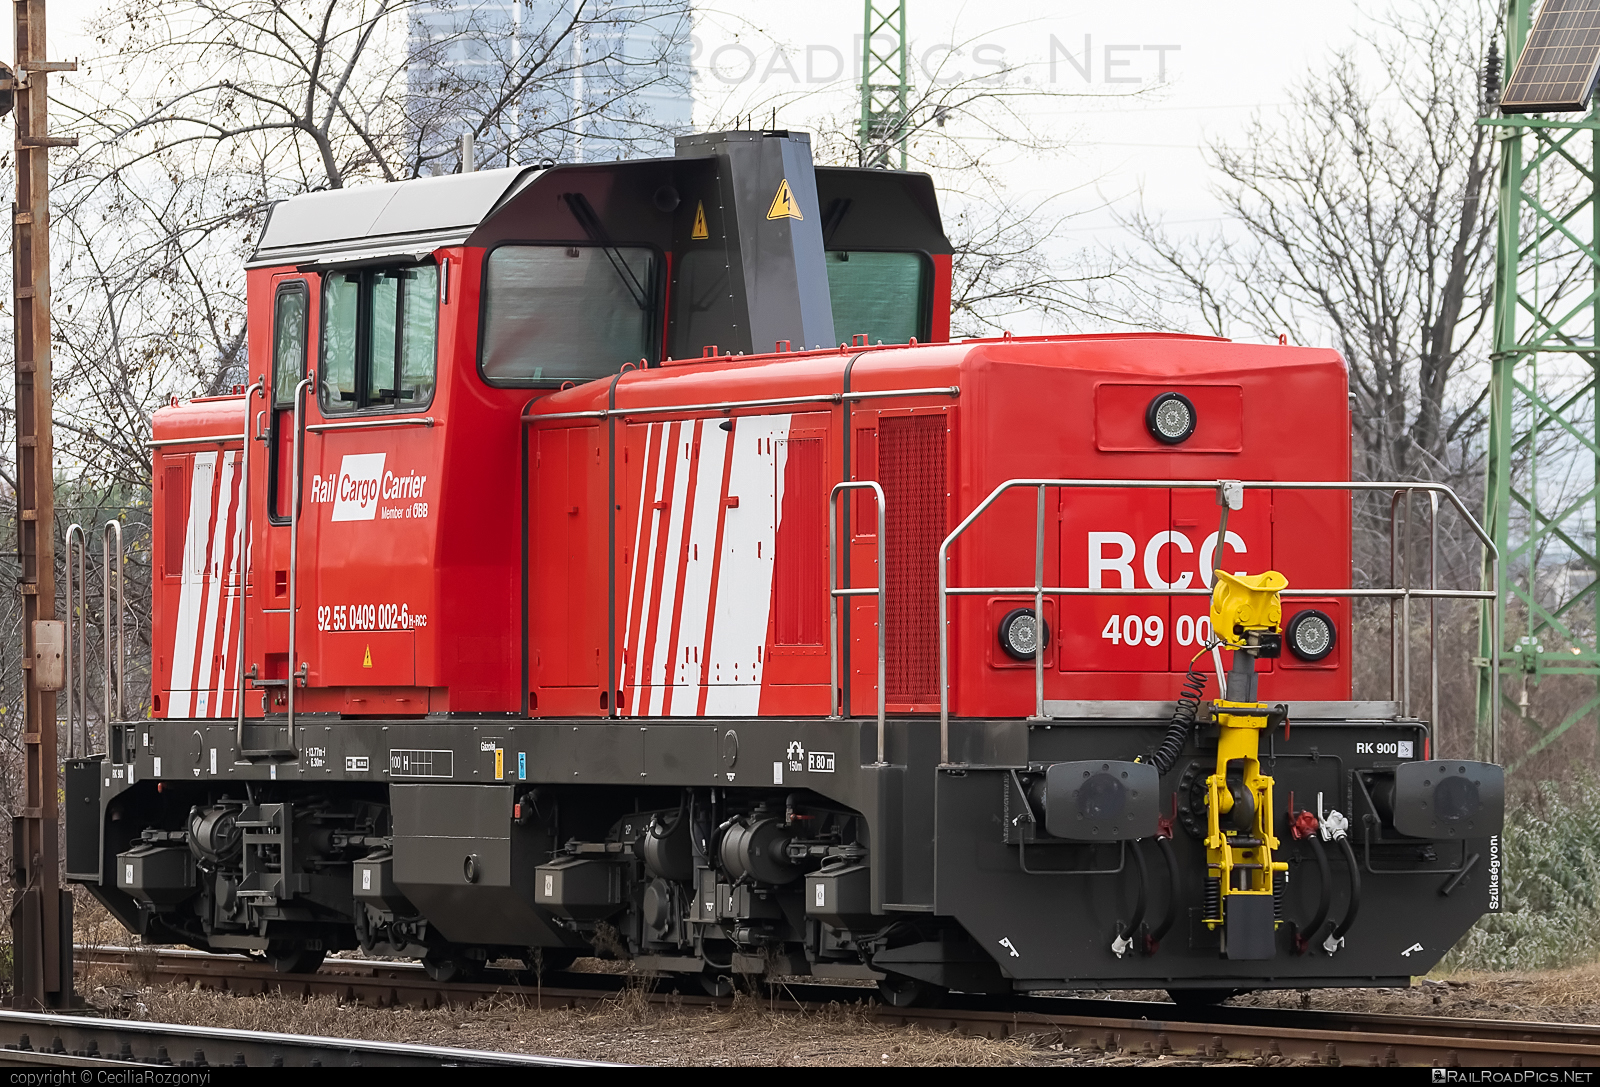 Jenbacher ÖBB Class 2068 - 409 002-5 operated by Rail Cargo Carrier Kft. #flusterlok #jenbacher #jenbacher2068 #obb2068 #obbClass2068 #rcchu